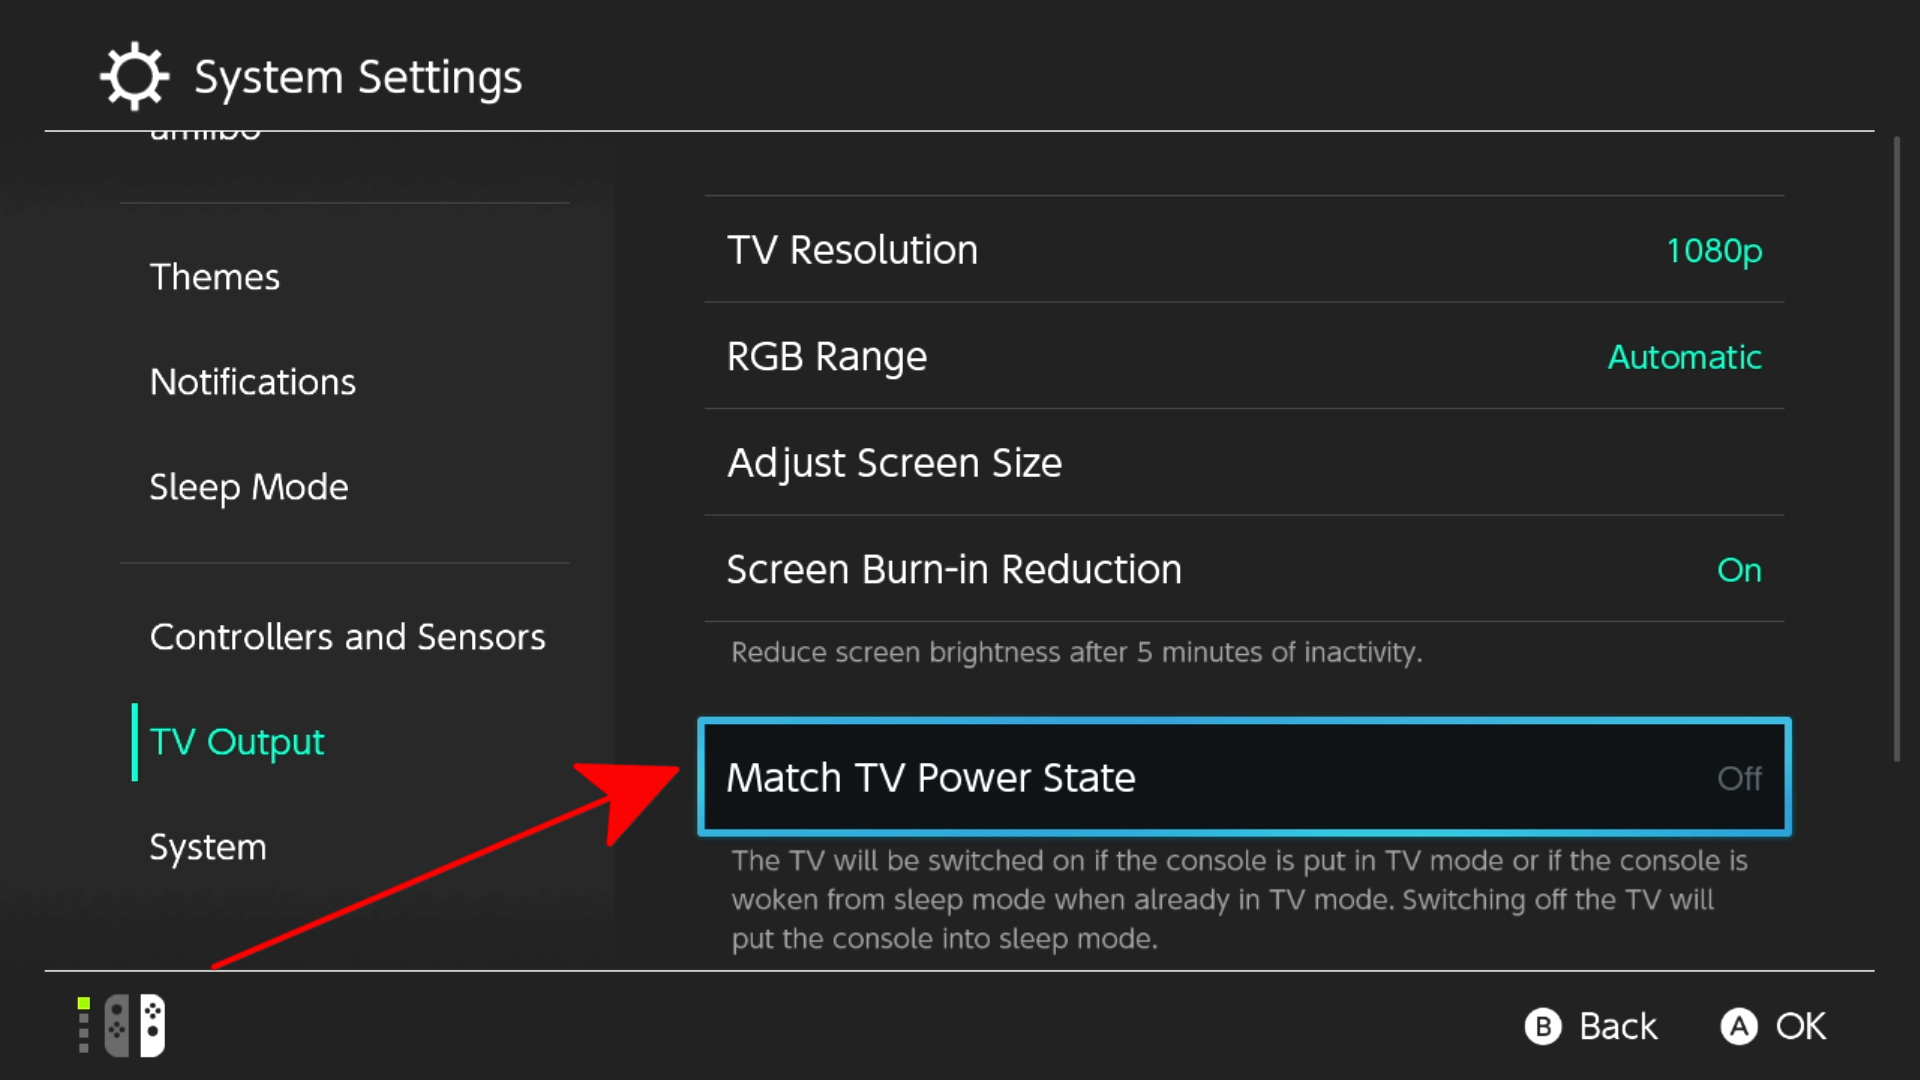 Match TV Power State